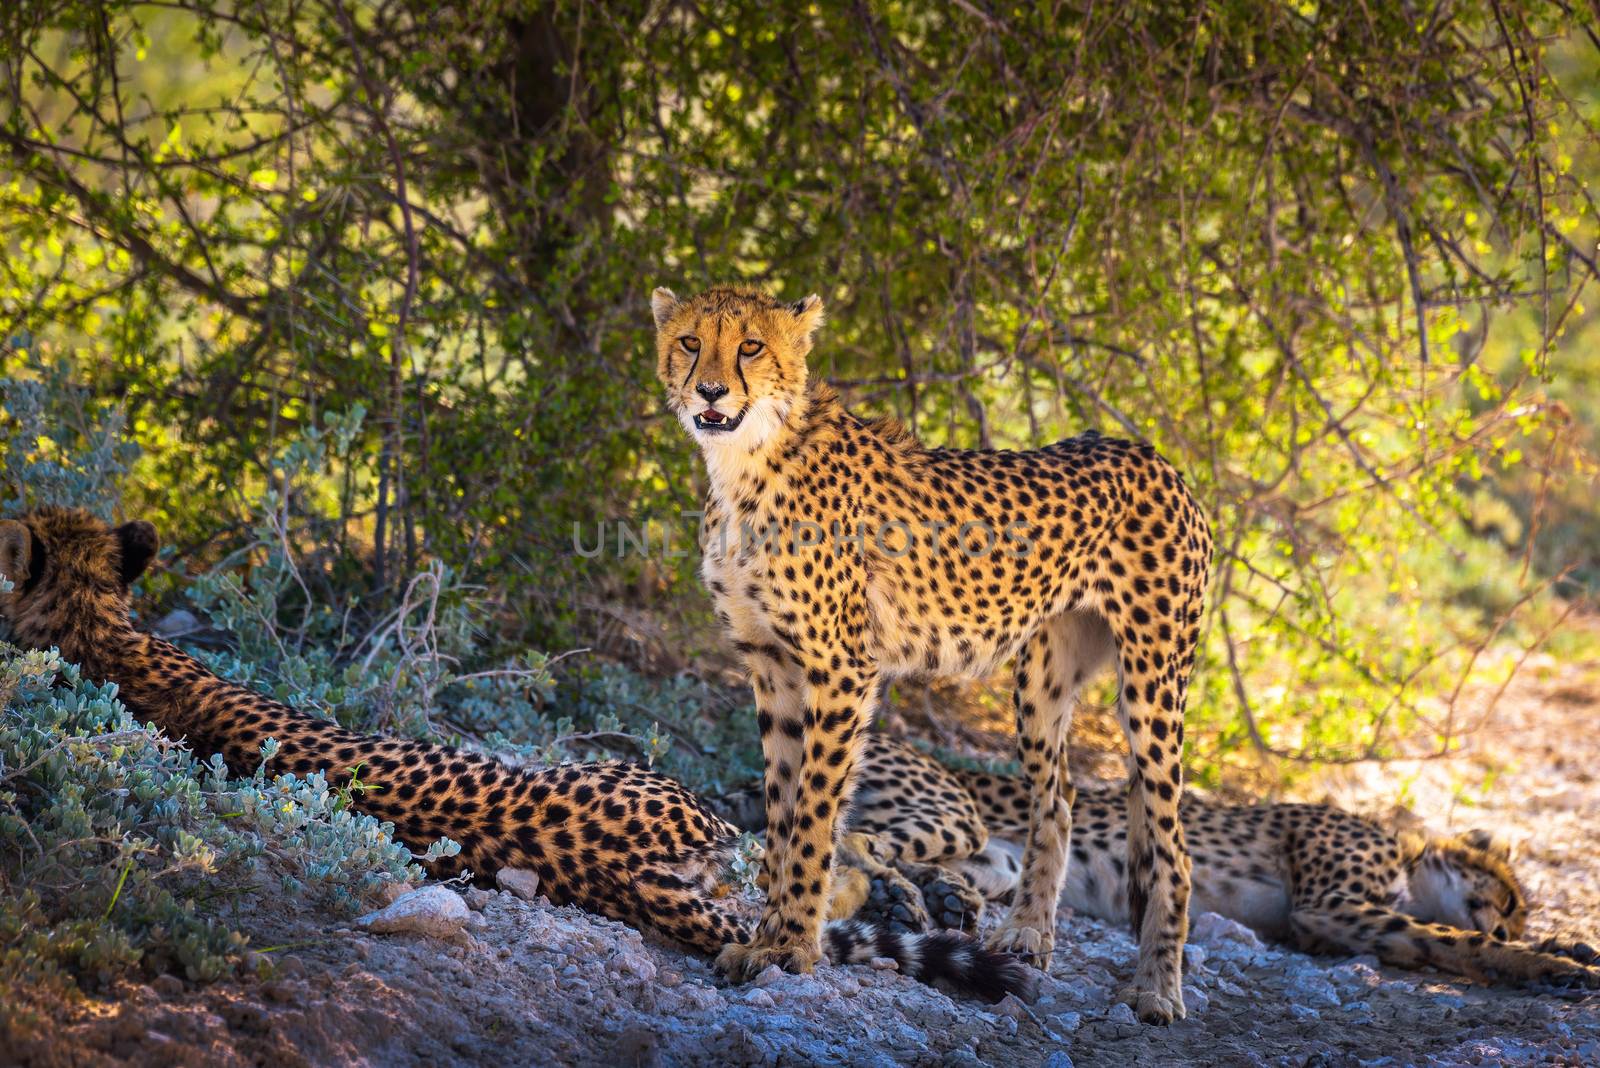 Three cheetahs in the Etosha National Park by nickfox